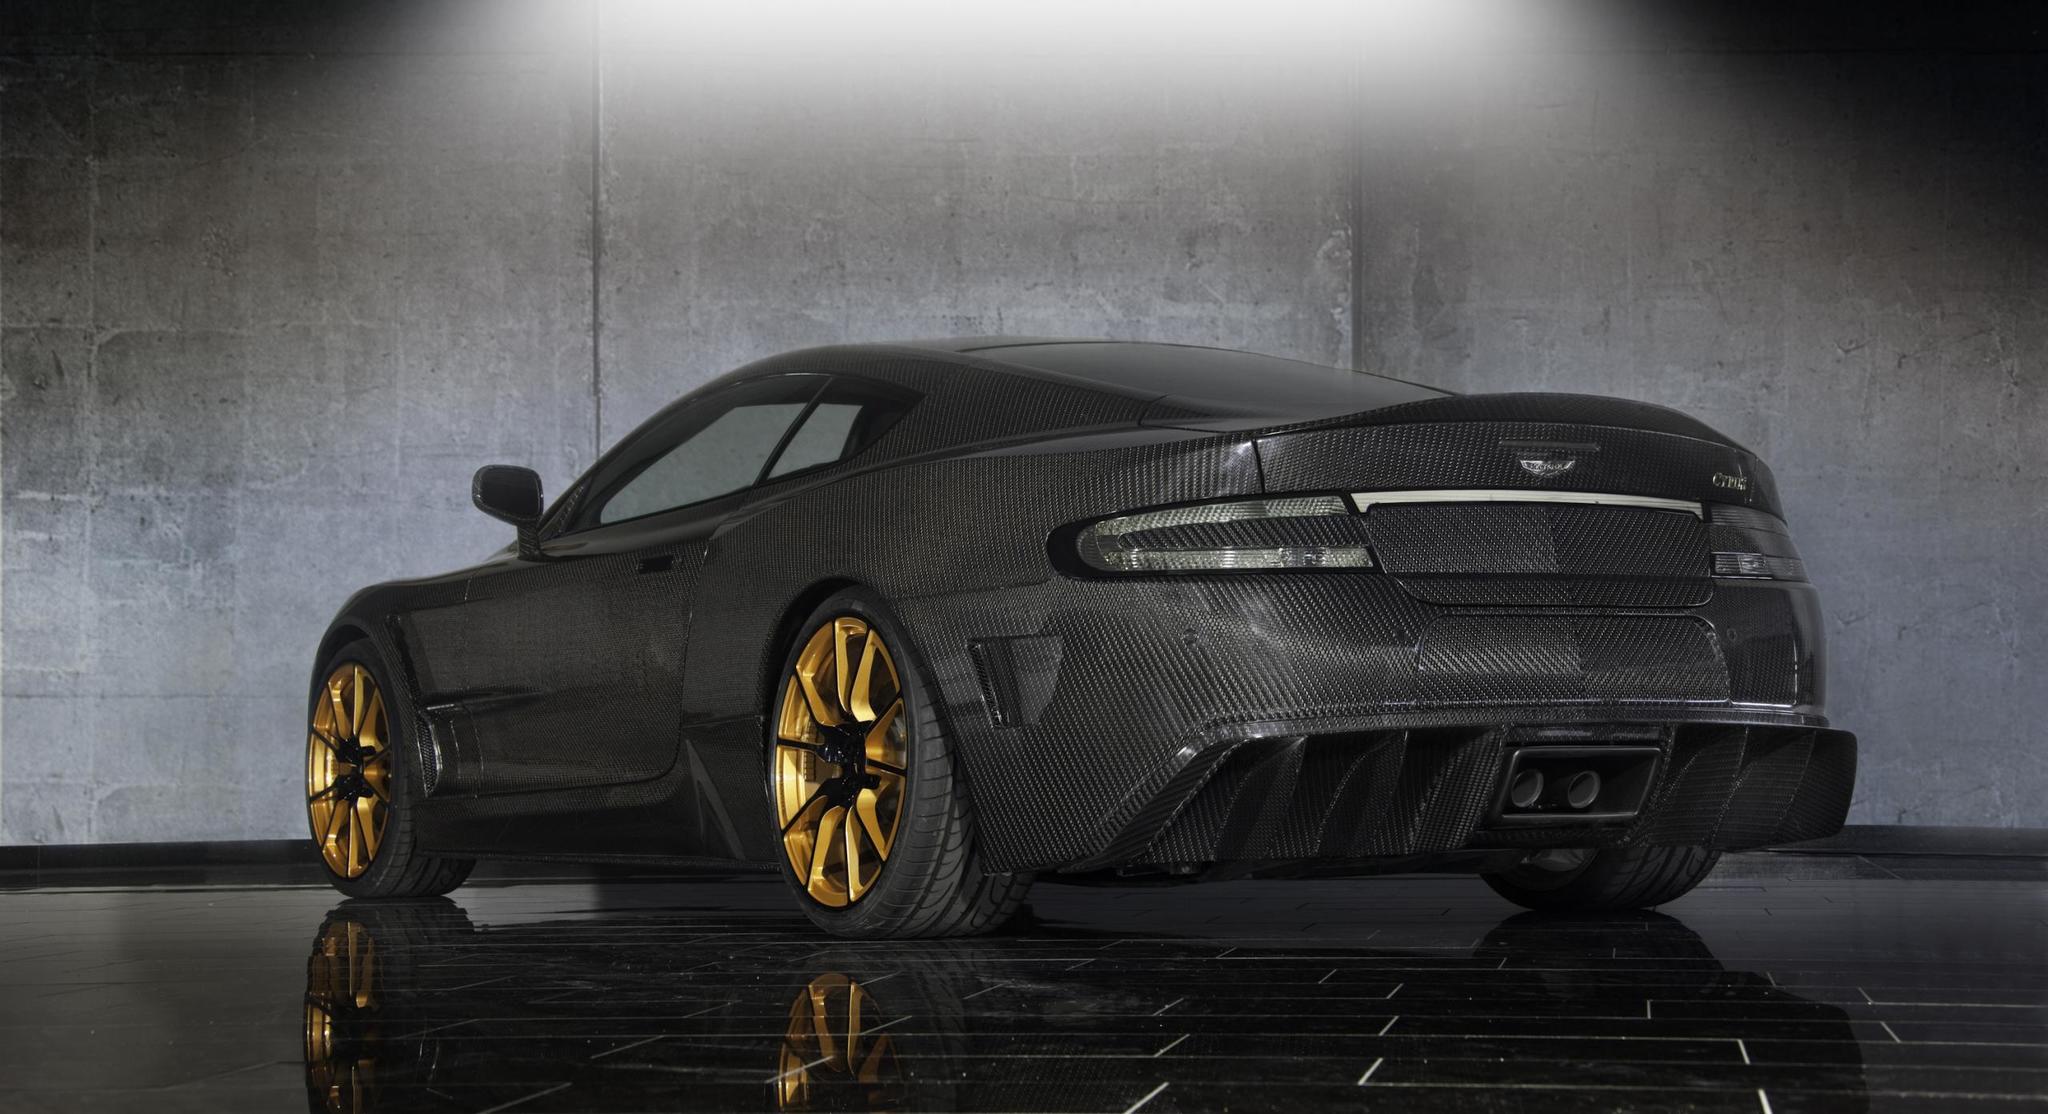 Mansory body kit for Aston Martin DBS/DB9 new style